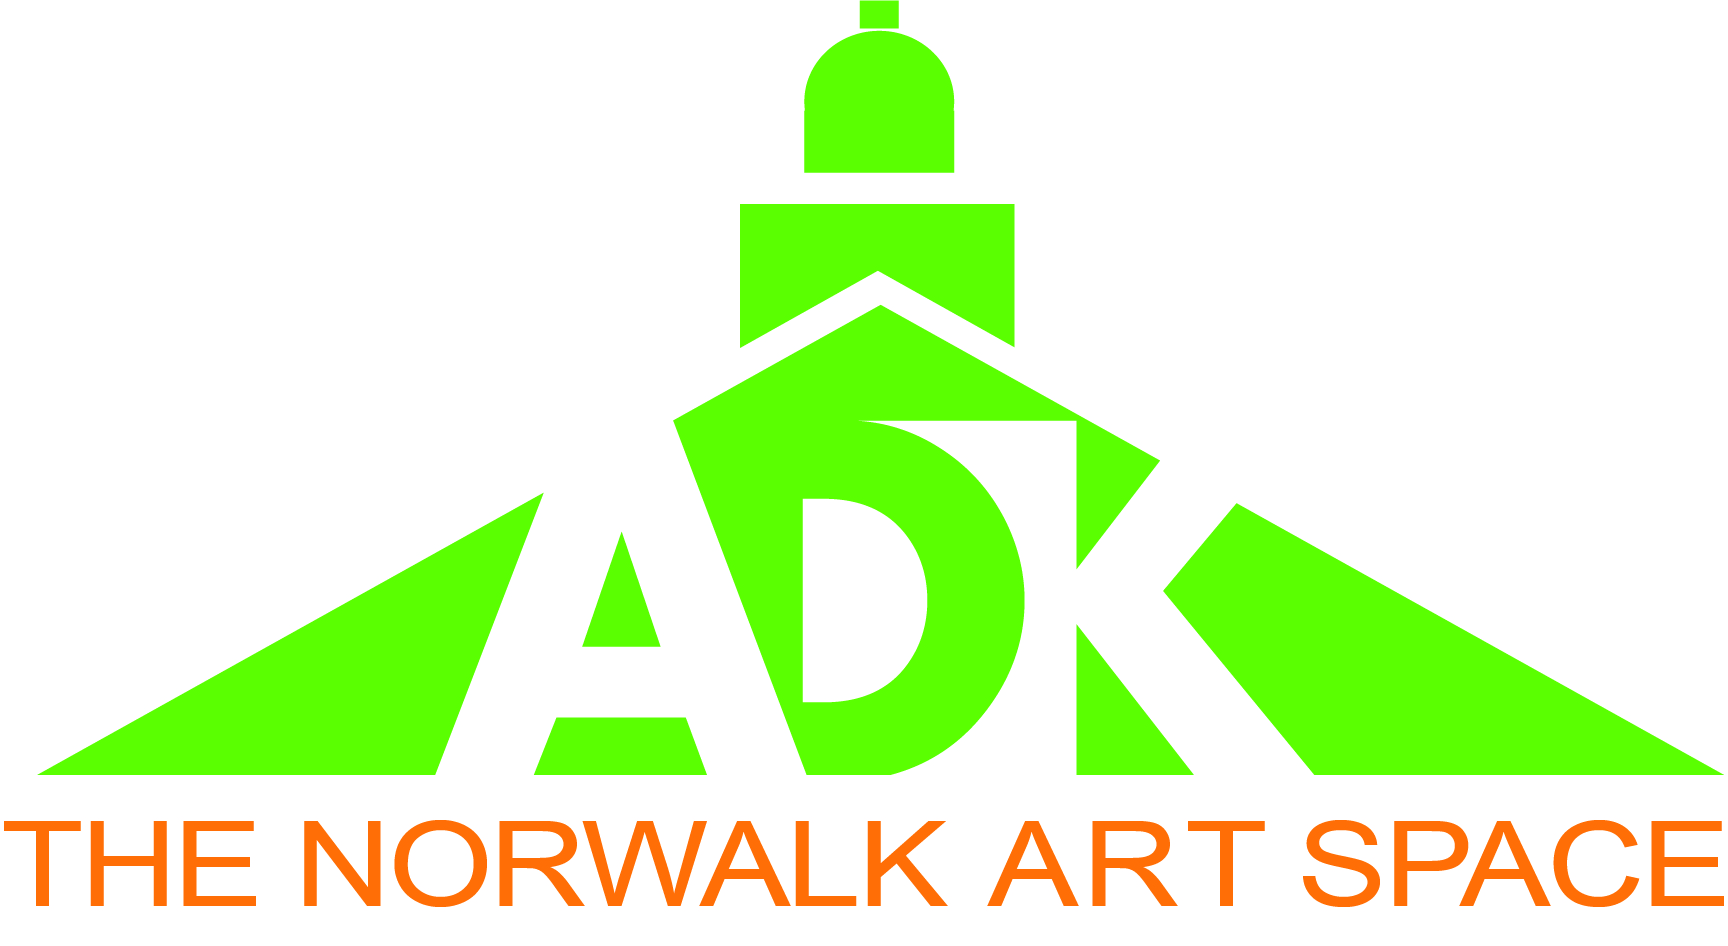 The Norwalk Art Space logo